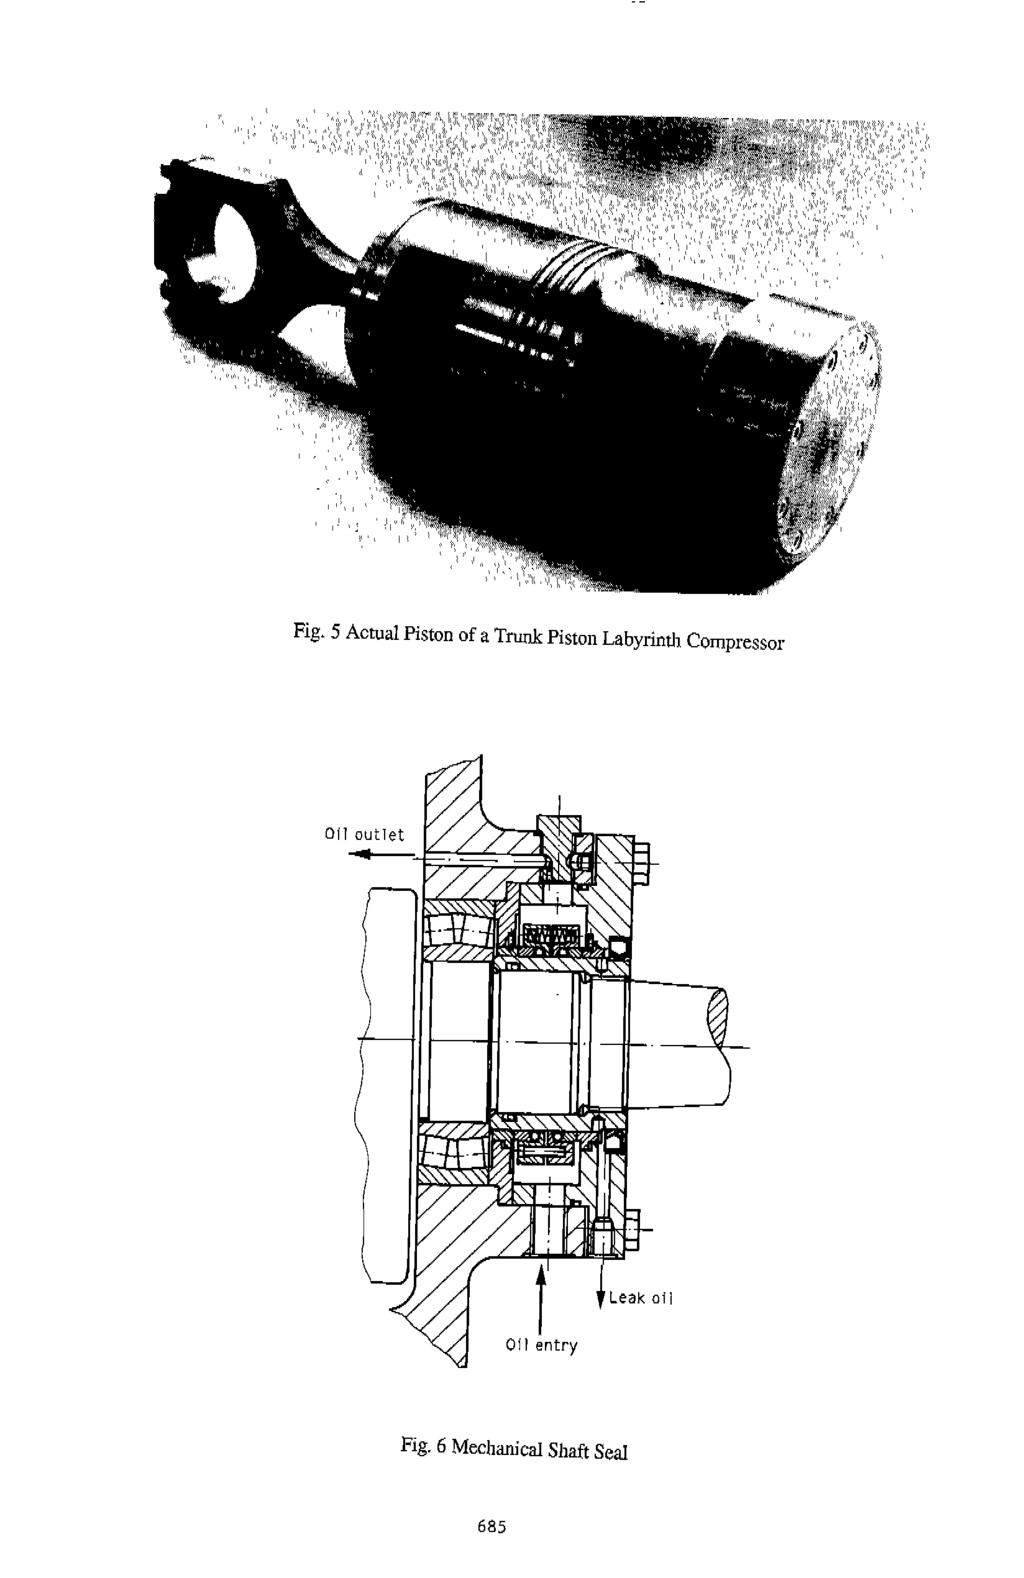 Fig. 5 Actual Piston of a Trunk Piston